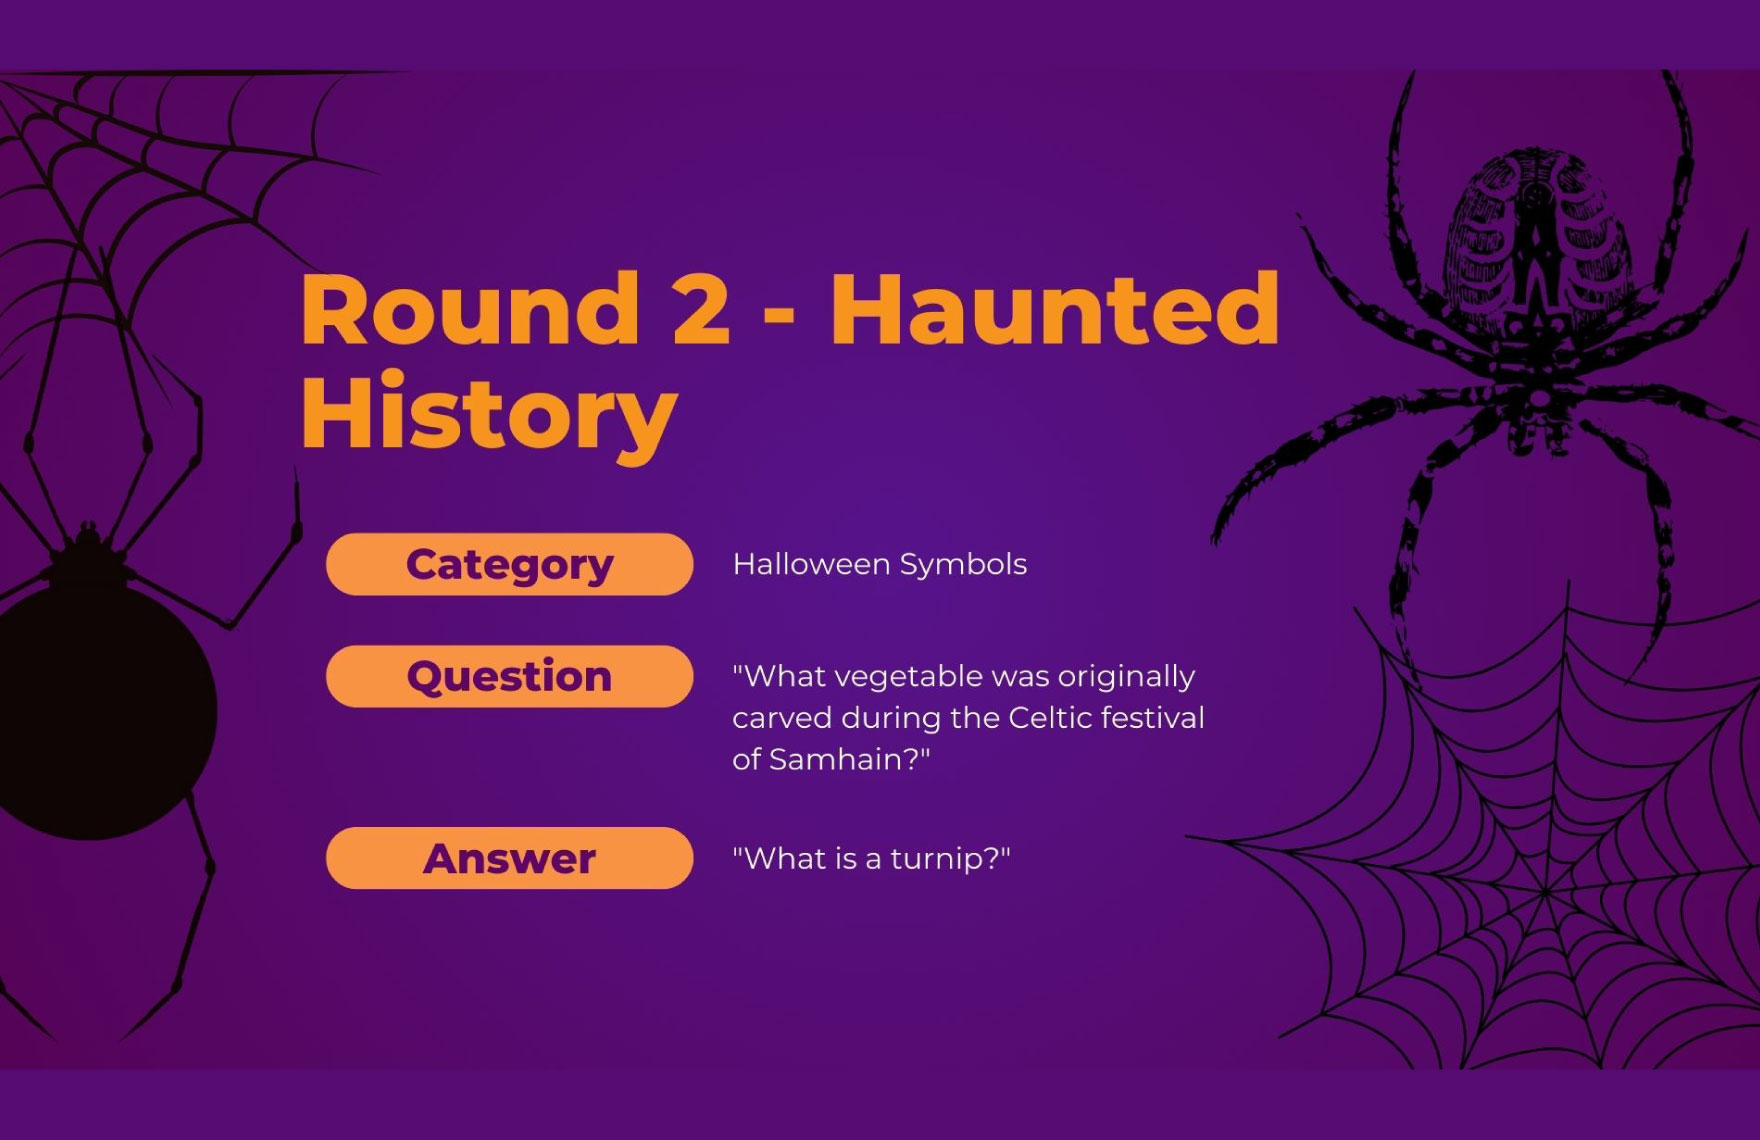 Halloween Jeopardy Template